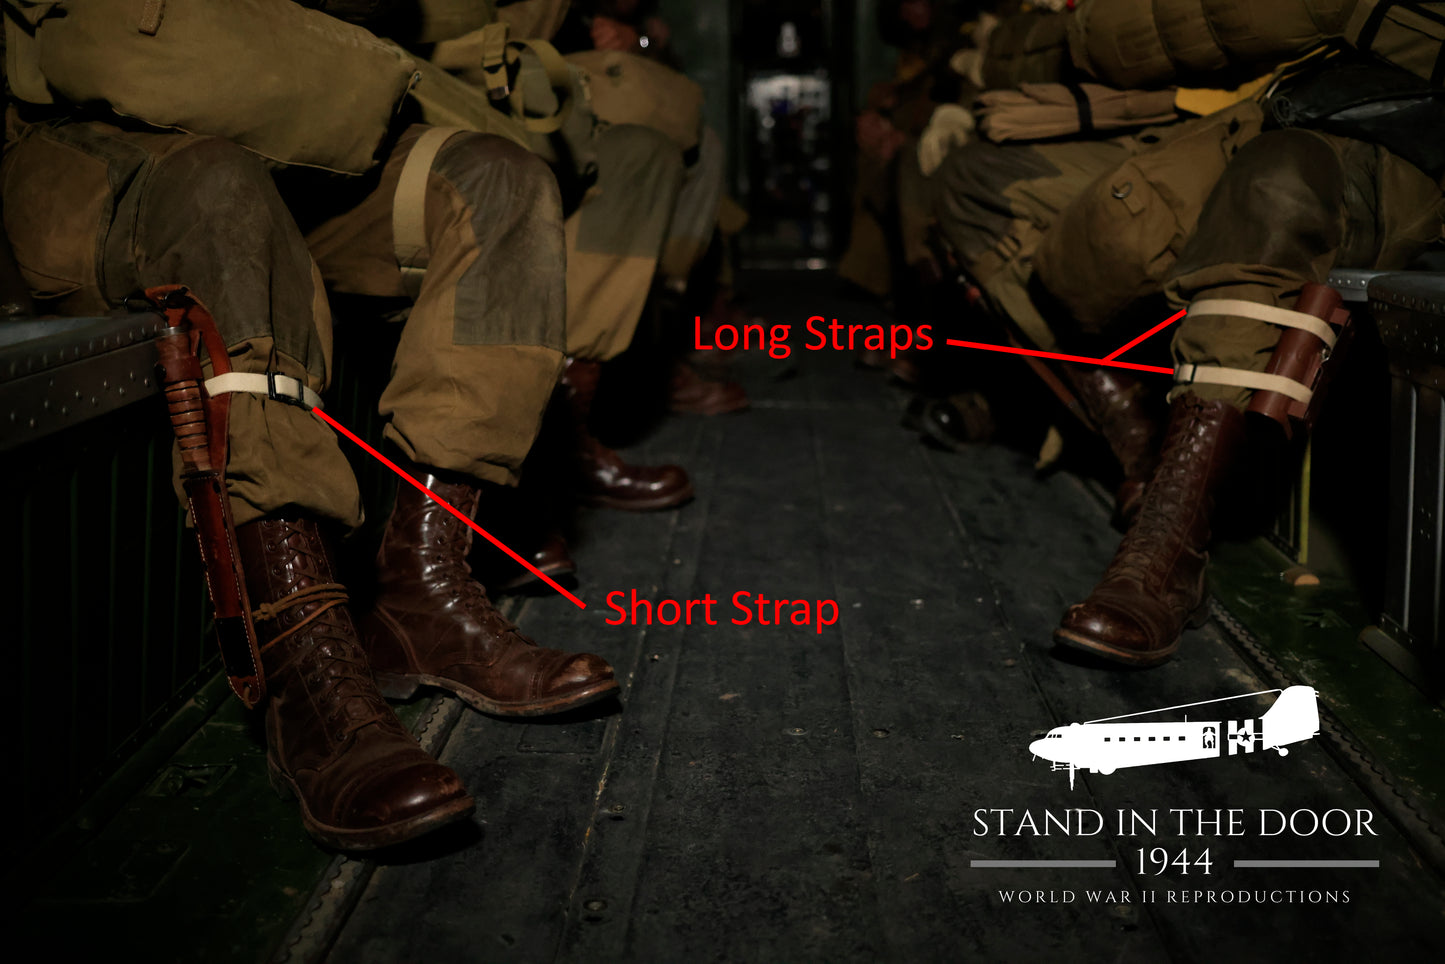 USGI Cot Straps (Paratrooper Leg Straps) Standard Length- Original Material